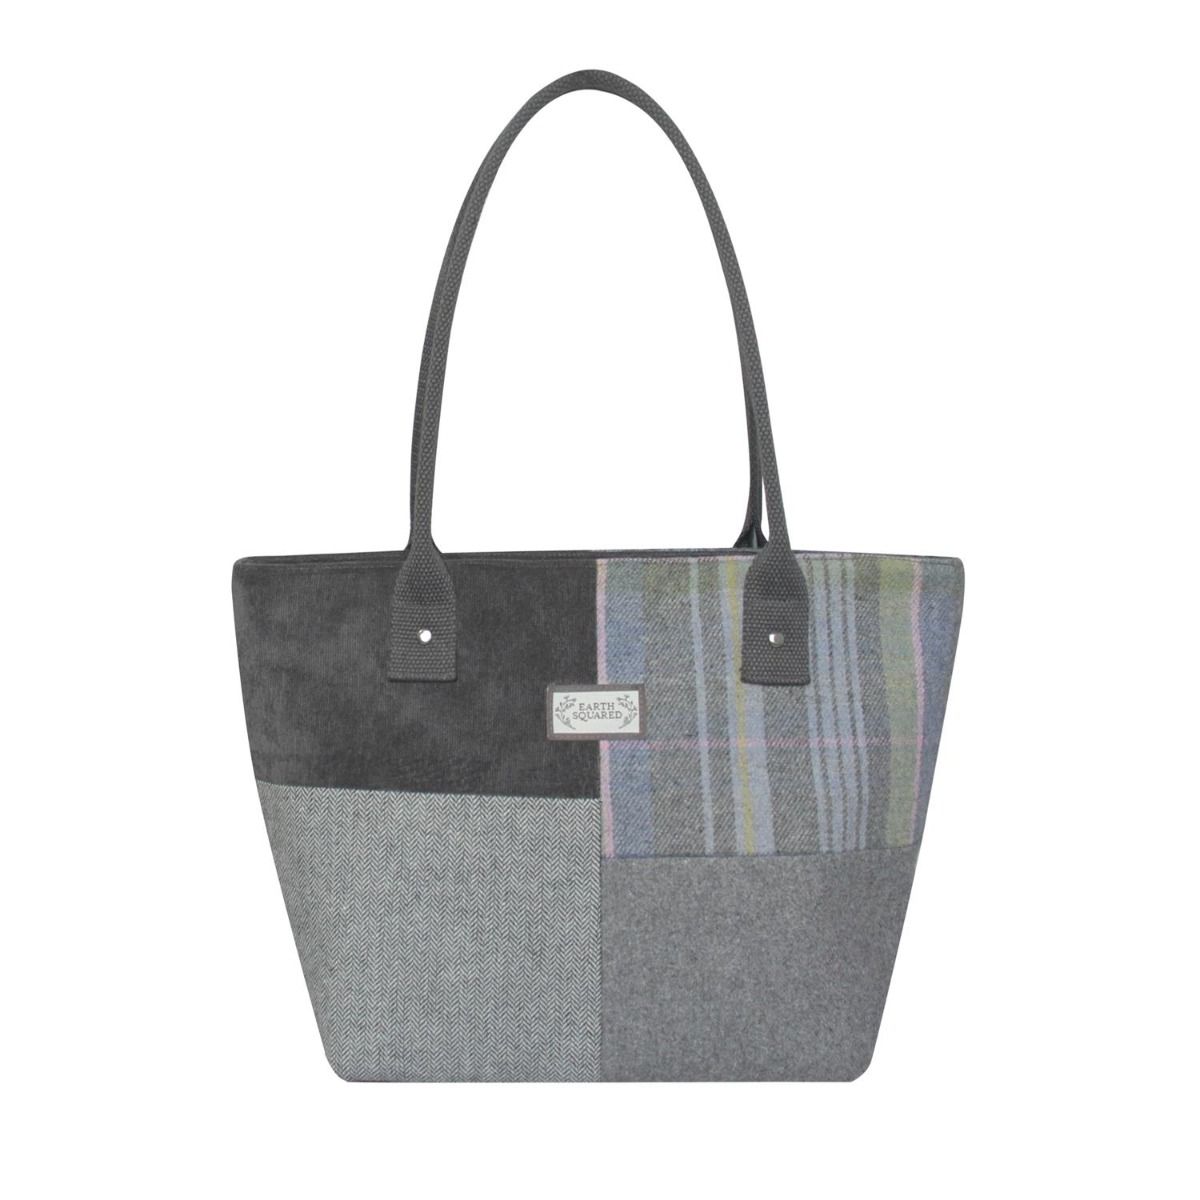 Luffness Tweed Tote Bag - The Nancy Smillie Shop - Art, Jewellery & Designer Gifts Glasgow